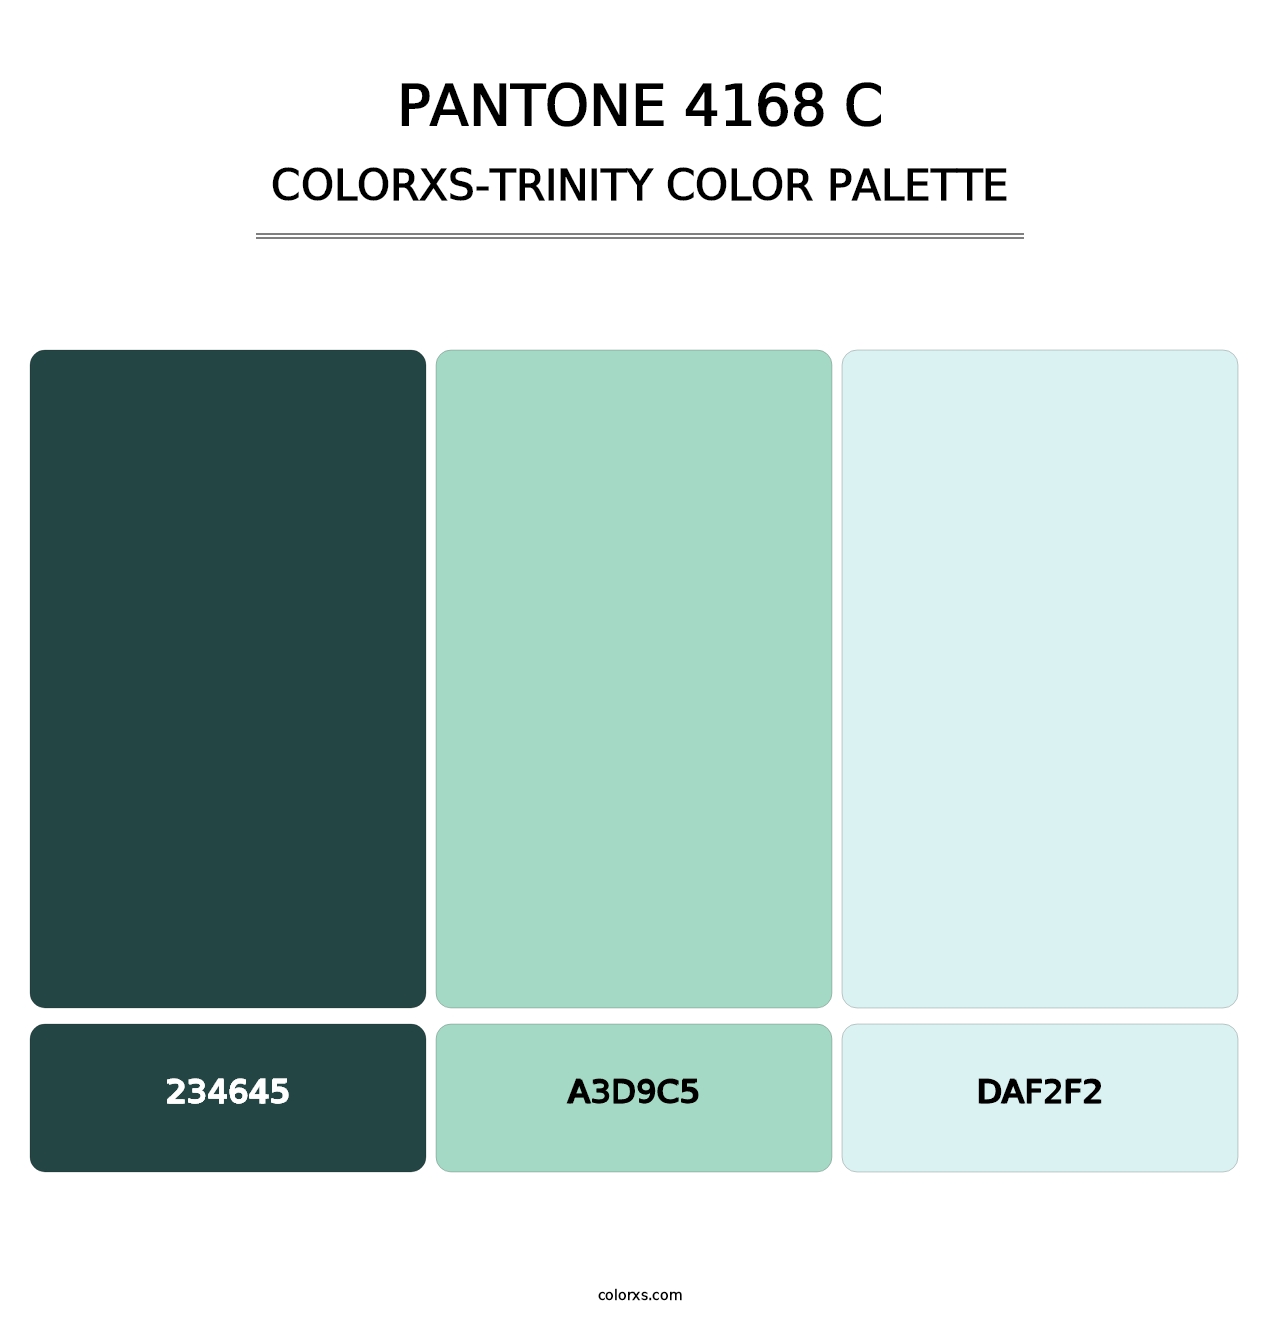 PANTONE 4168 C - Colorxs Trinity Palette